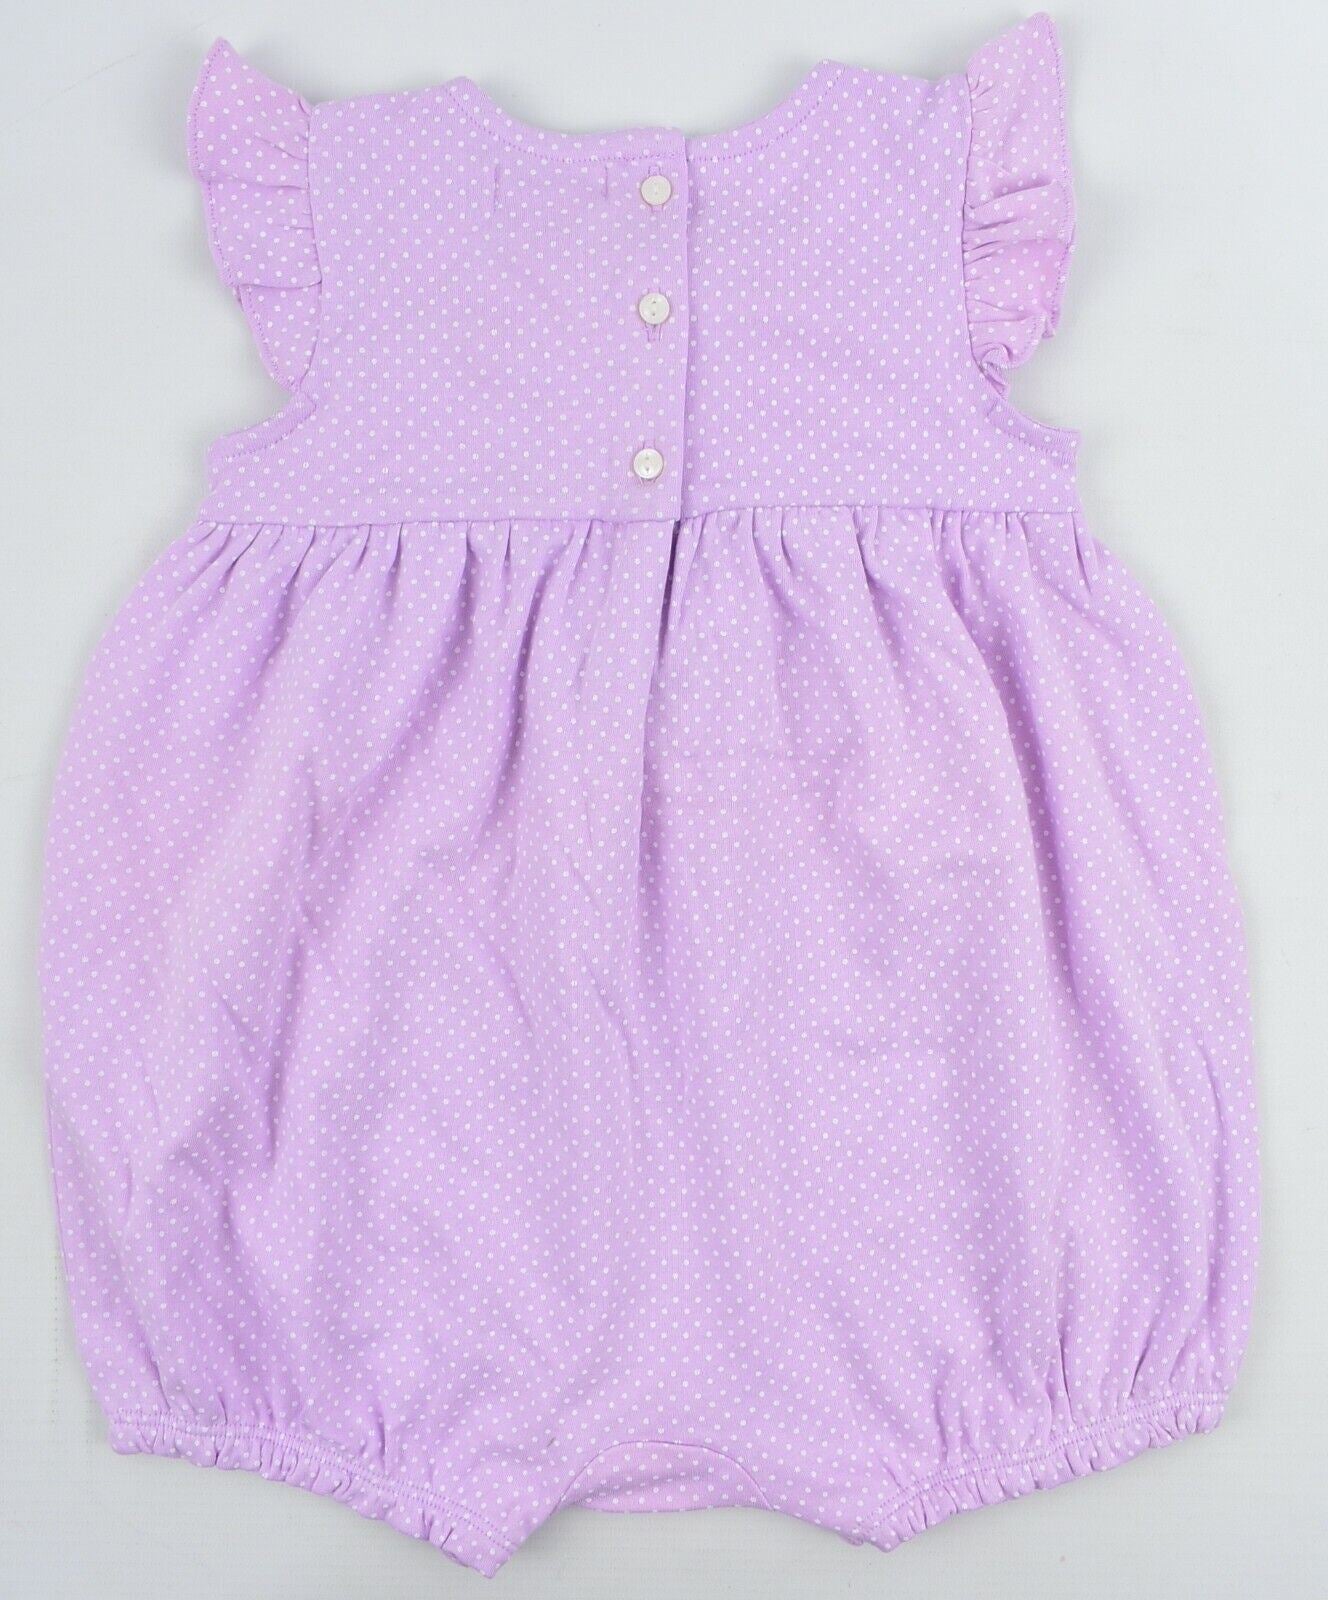 RALPH LAUREN Baby Girls' Polka Dot Romper, Playsuit, Purple, size 24 months